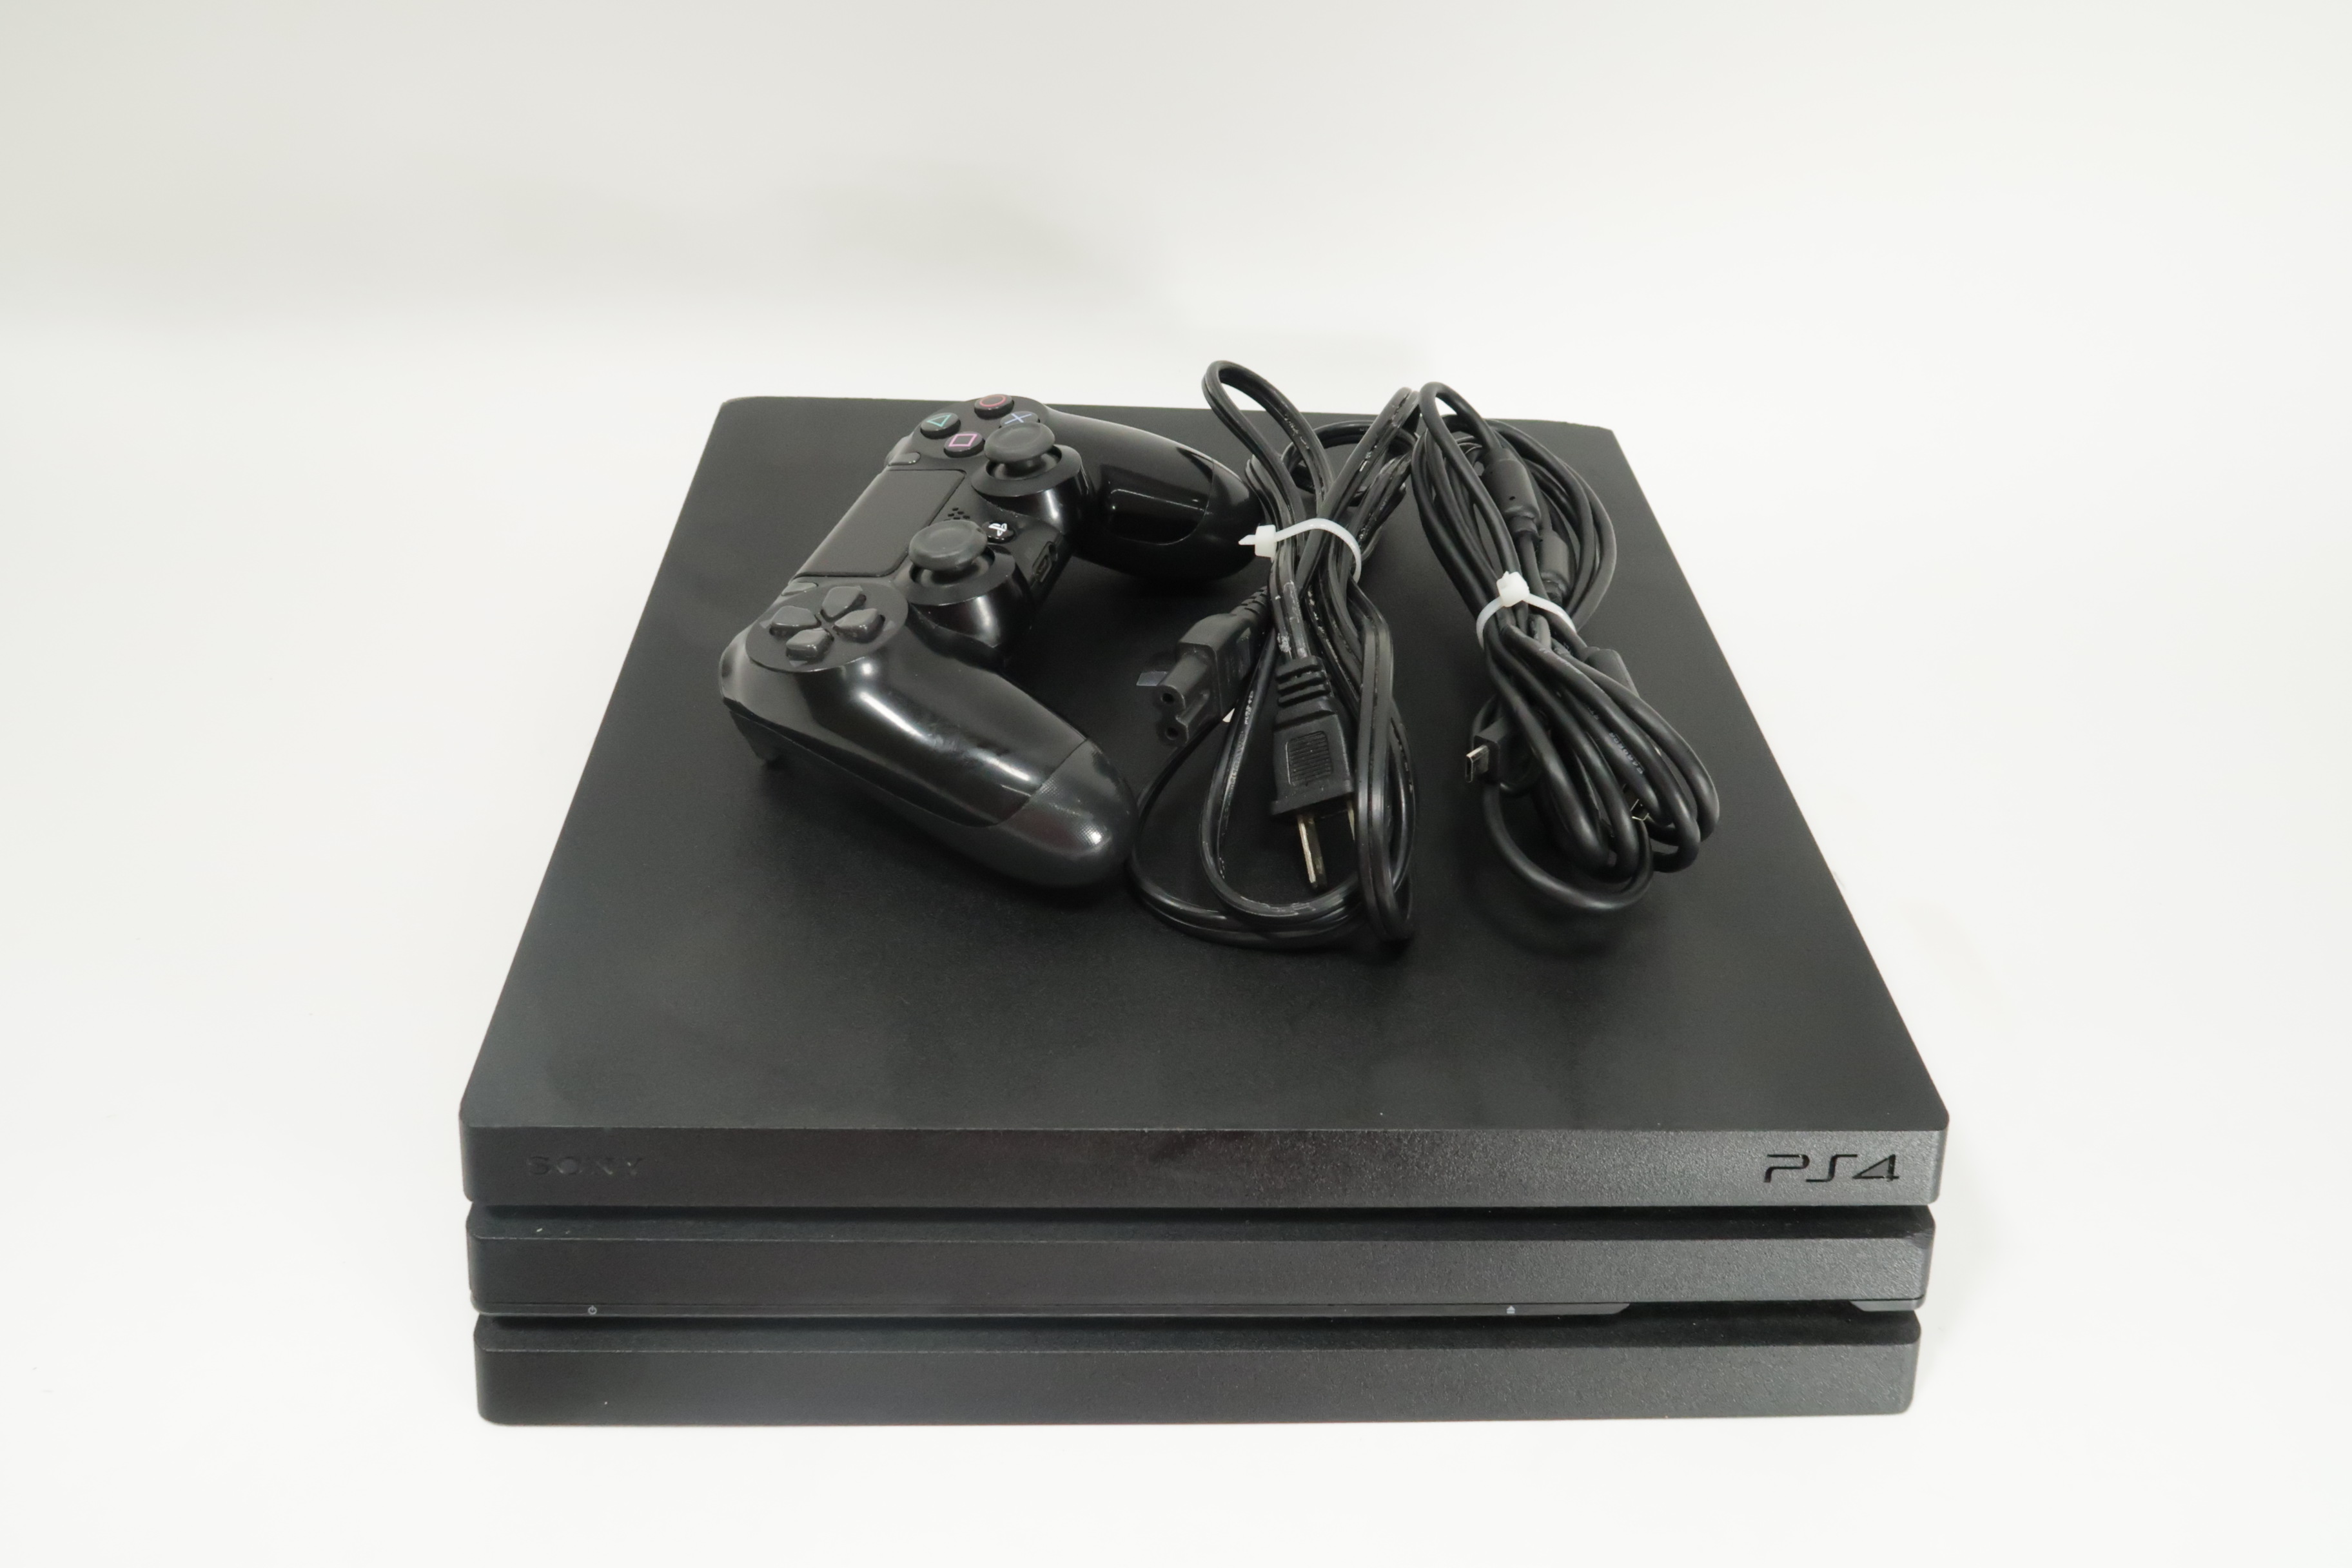 Sony PlayStation 4 Pro w/ Accessories, 1TB HDD, CUH-7215B - Jet Black  (Renewed)